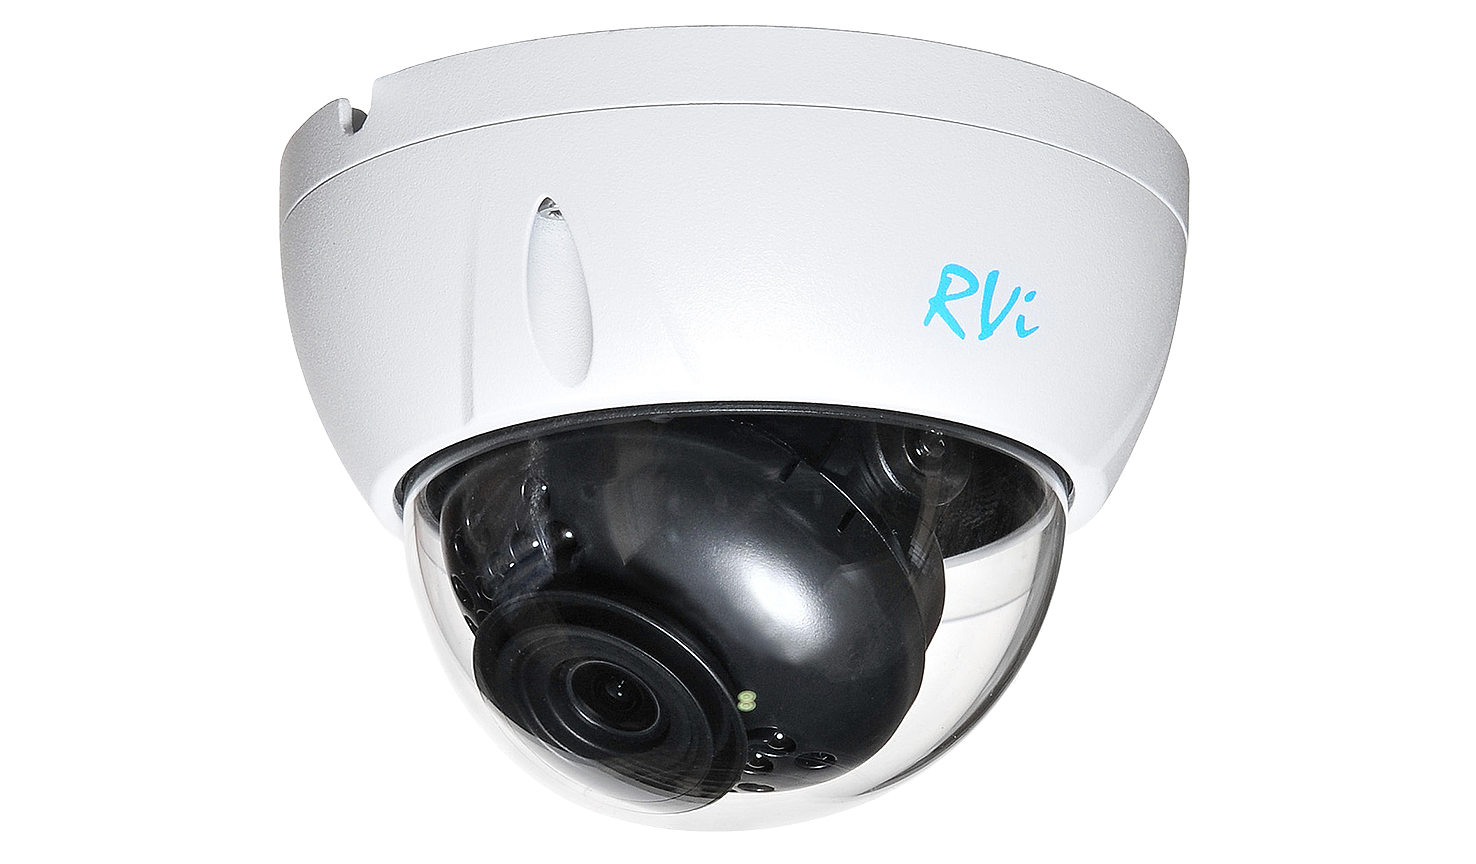 IP-камера RVi 1NCD2020 2.8мм, уличная, купольная, 2Мпикс, CMOS, до 1920x1080, до 25 кадров/с, ИК подсветка 30м, POE, -40 °C/+60 °C, белый (1NCD2020 (2.8 мм))